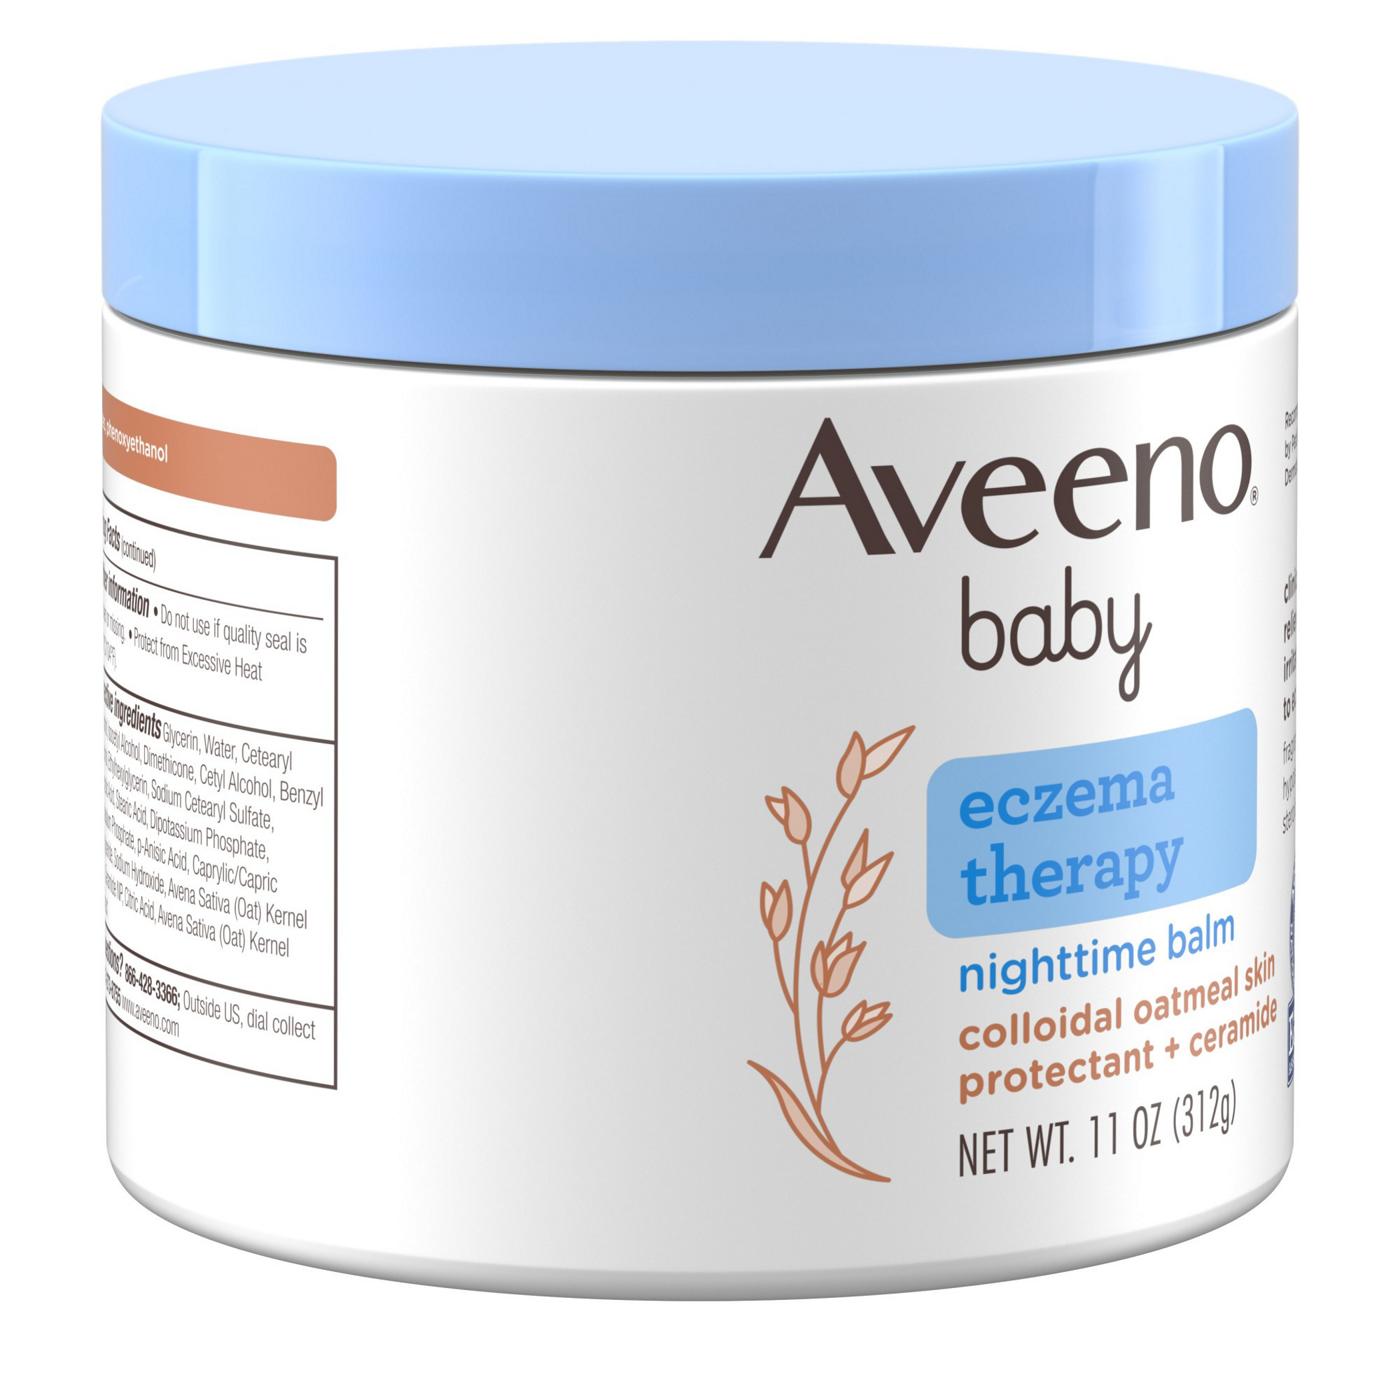 Aveeno Baby Eczema Therapy Nighttime Balm; image 5 of 6